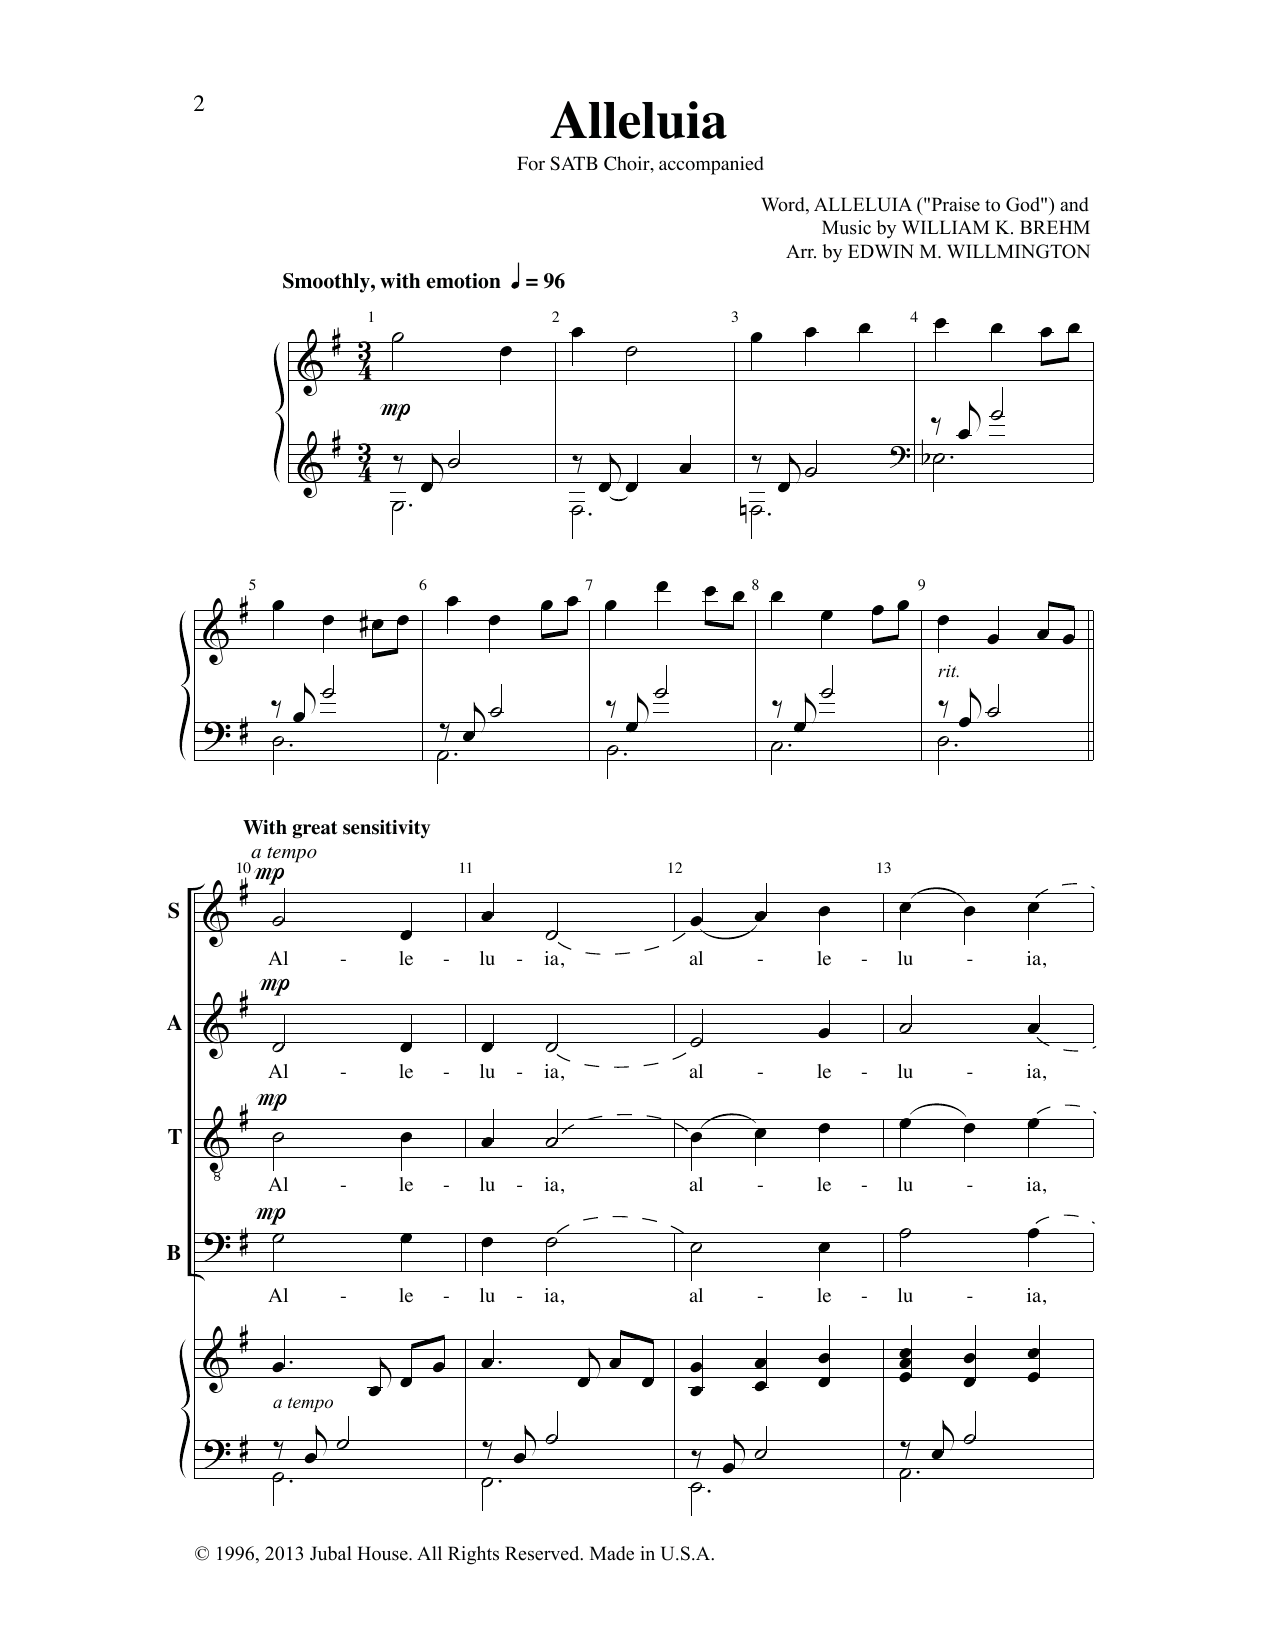 William K. Brehm Alleluia (arr. Edwin M. Willmington) Sheet Music Notes & Chords for SATB Choir - Download or Print PDF